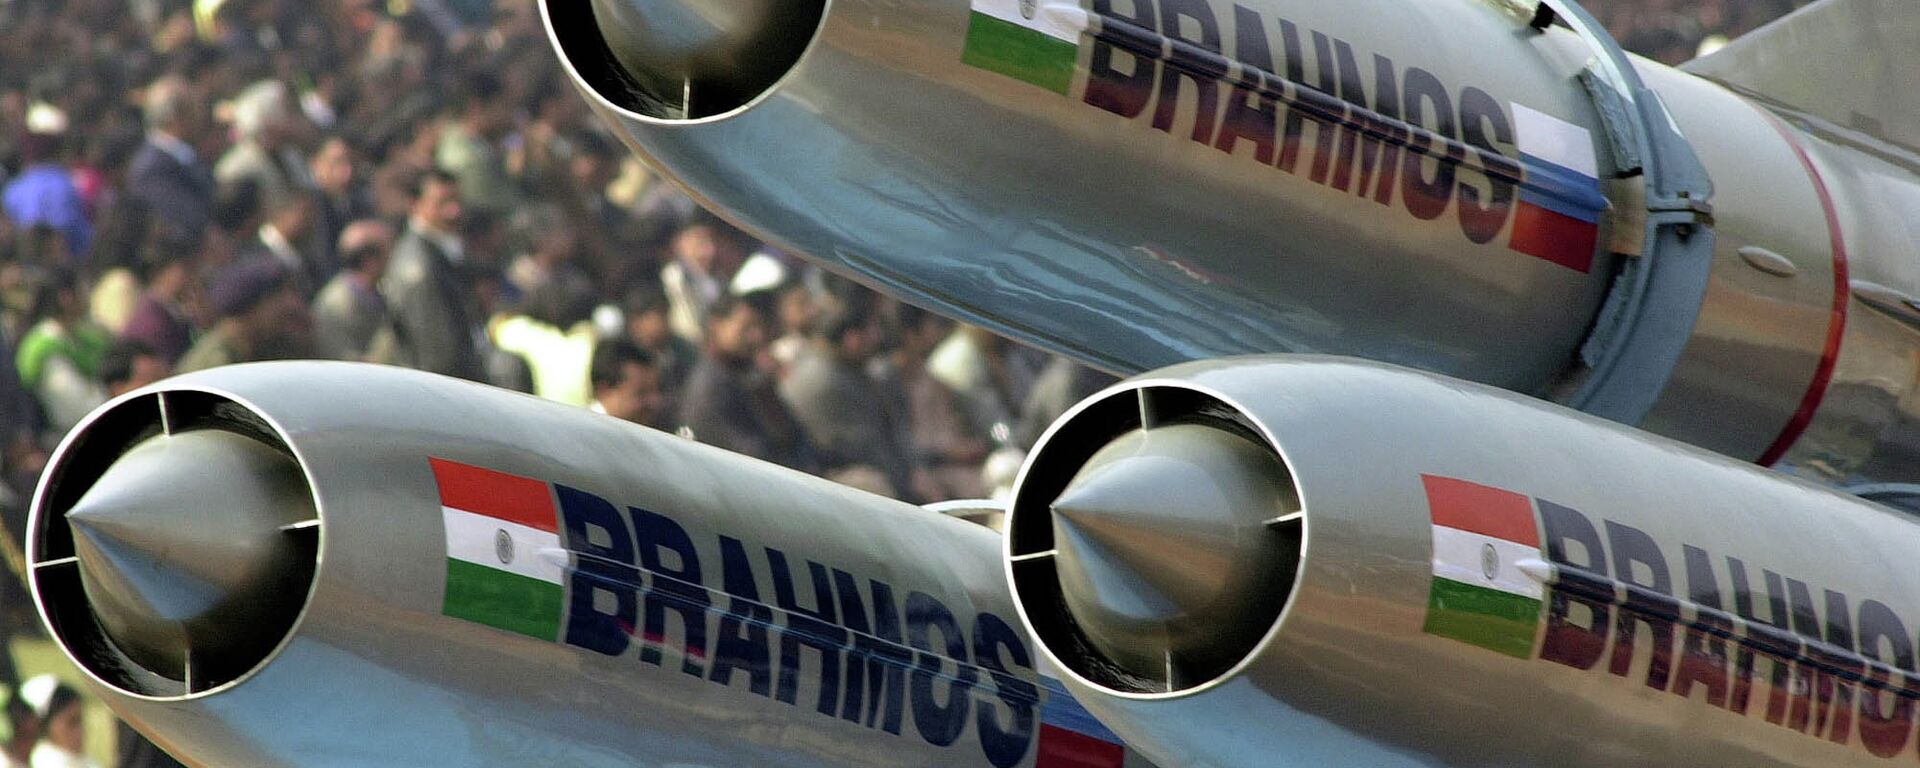 India's supersonic Brahmos cruise missiles - Sputnik International, 1920, 05.10.2020